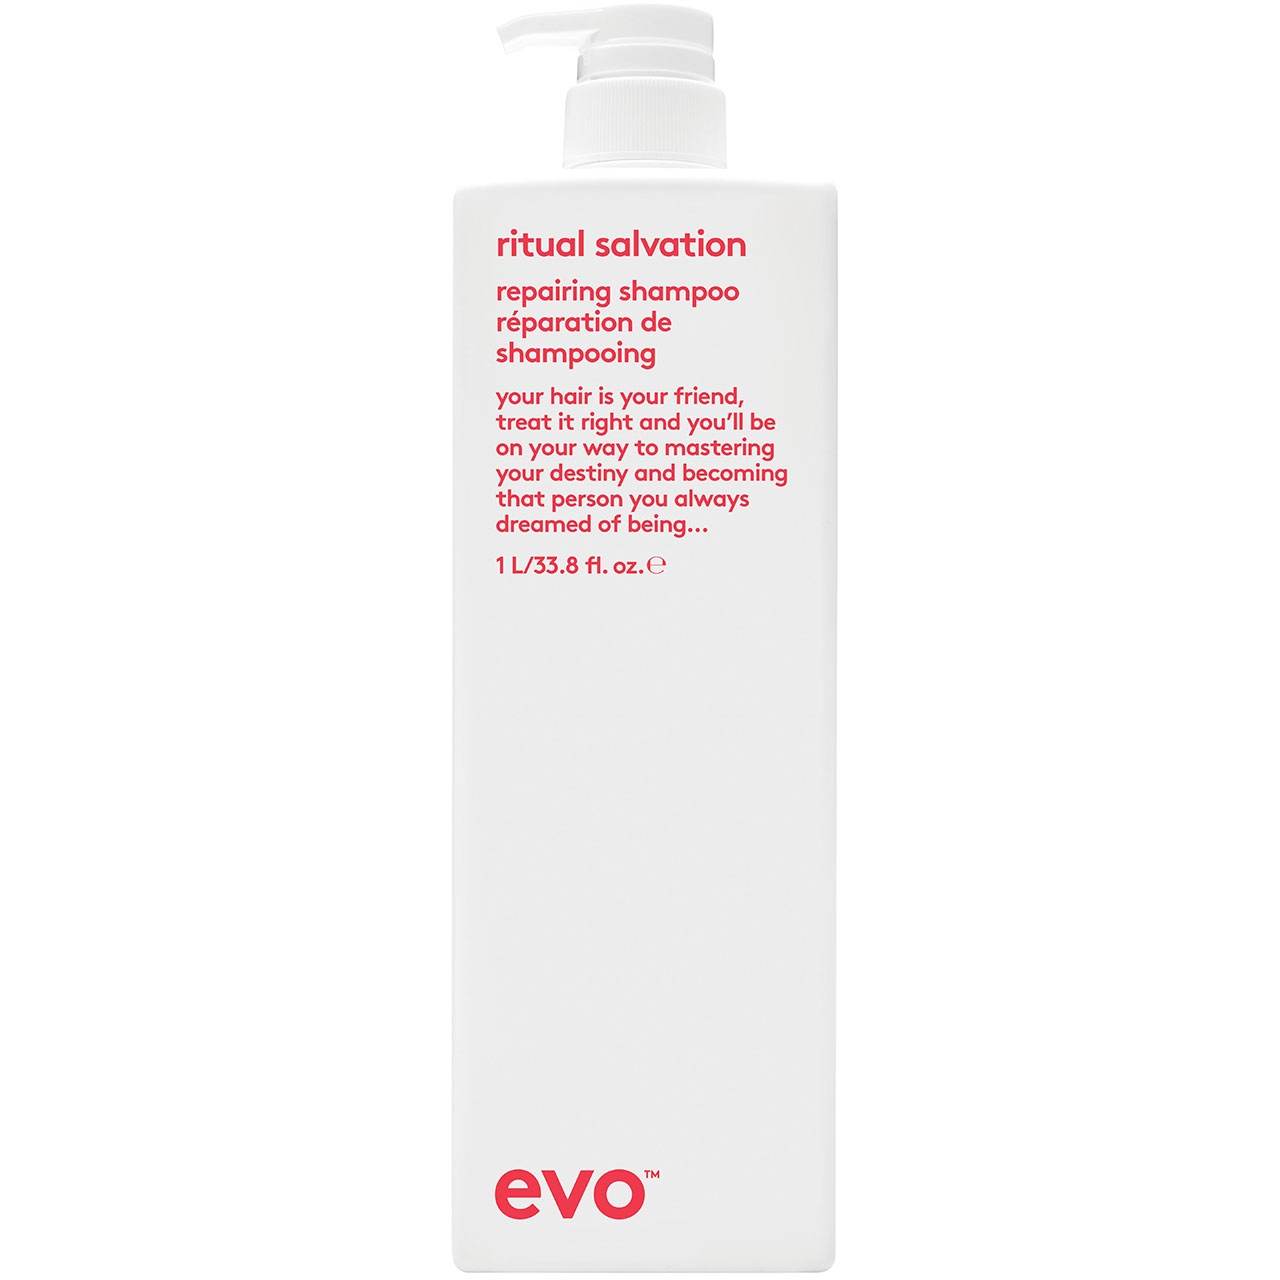 evo Ritual Salvation Repairing Shampoo Liter